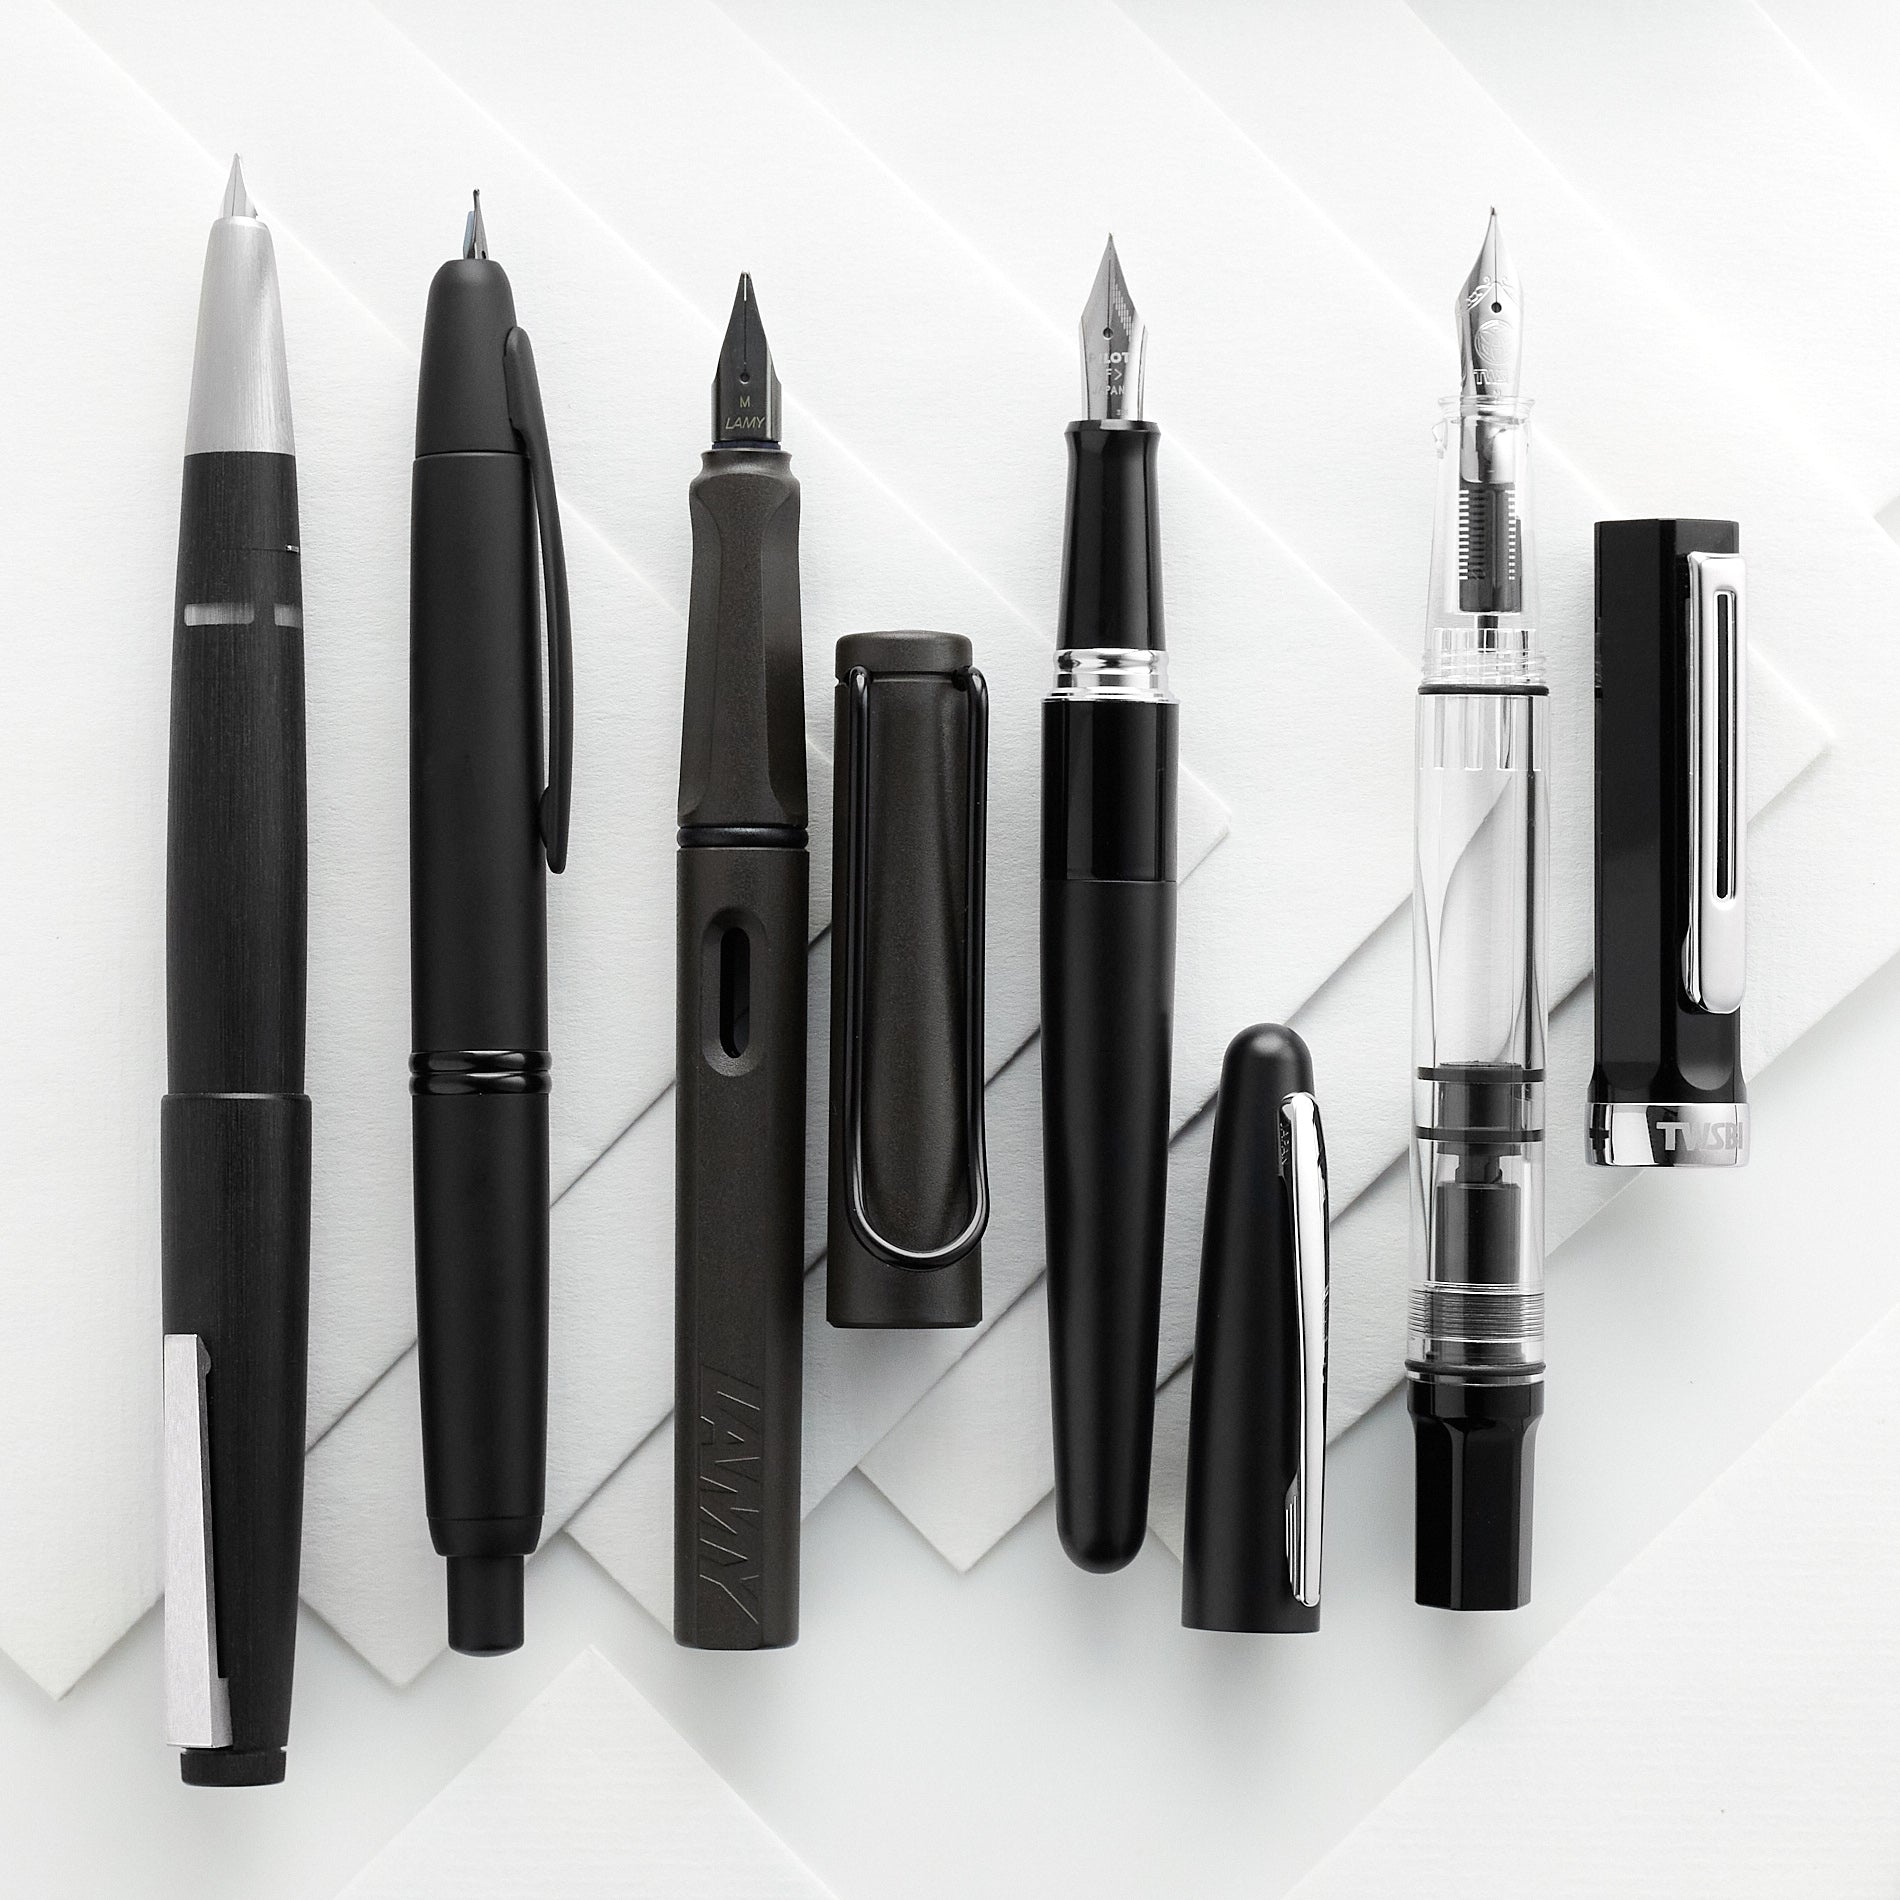 Black Fountain Pens - The Goulet Pen Company